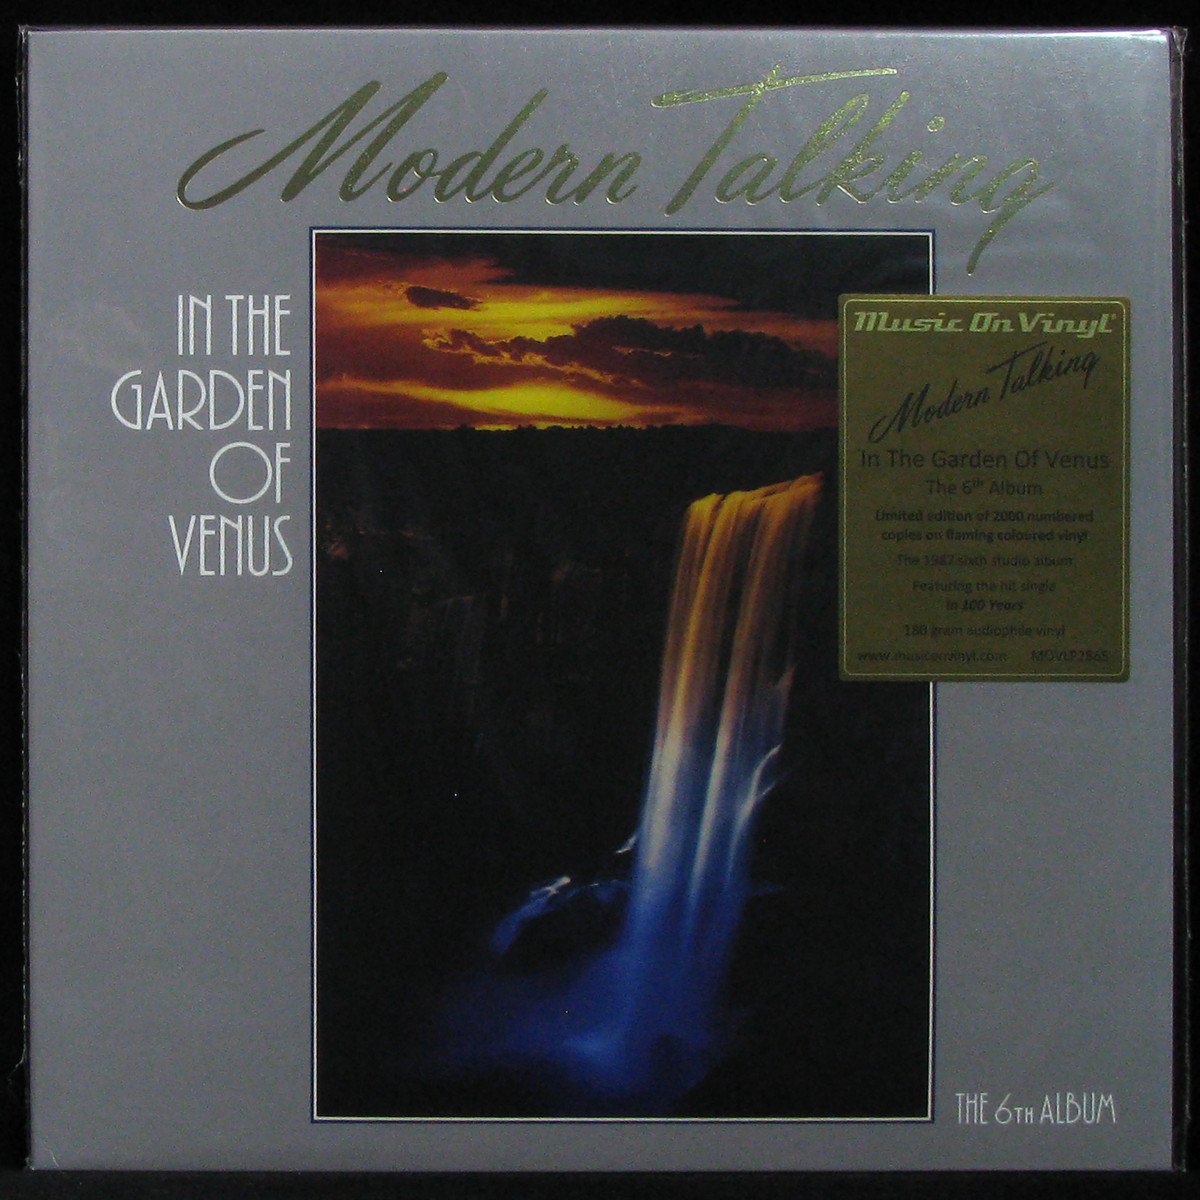 LP Modern Talking — In The Garden Of Venus (coloured vinyl) фото